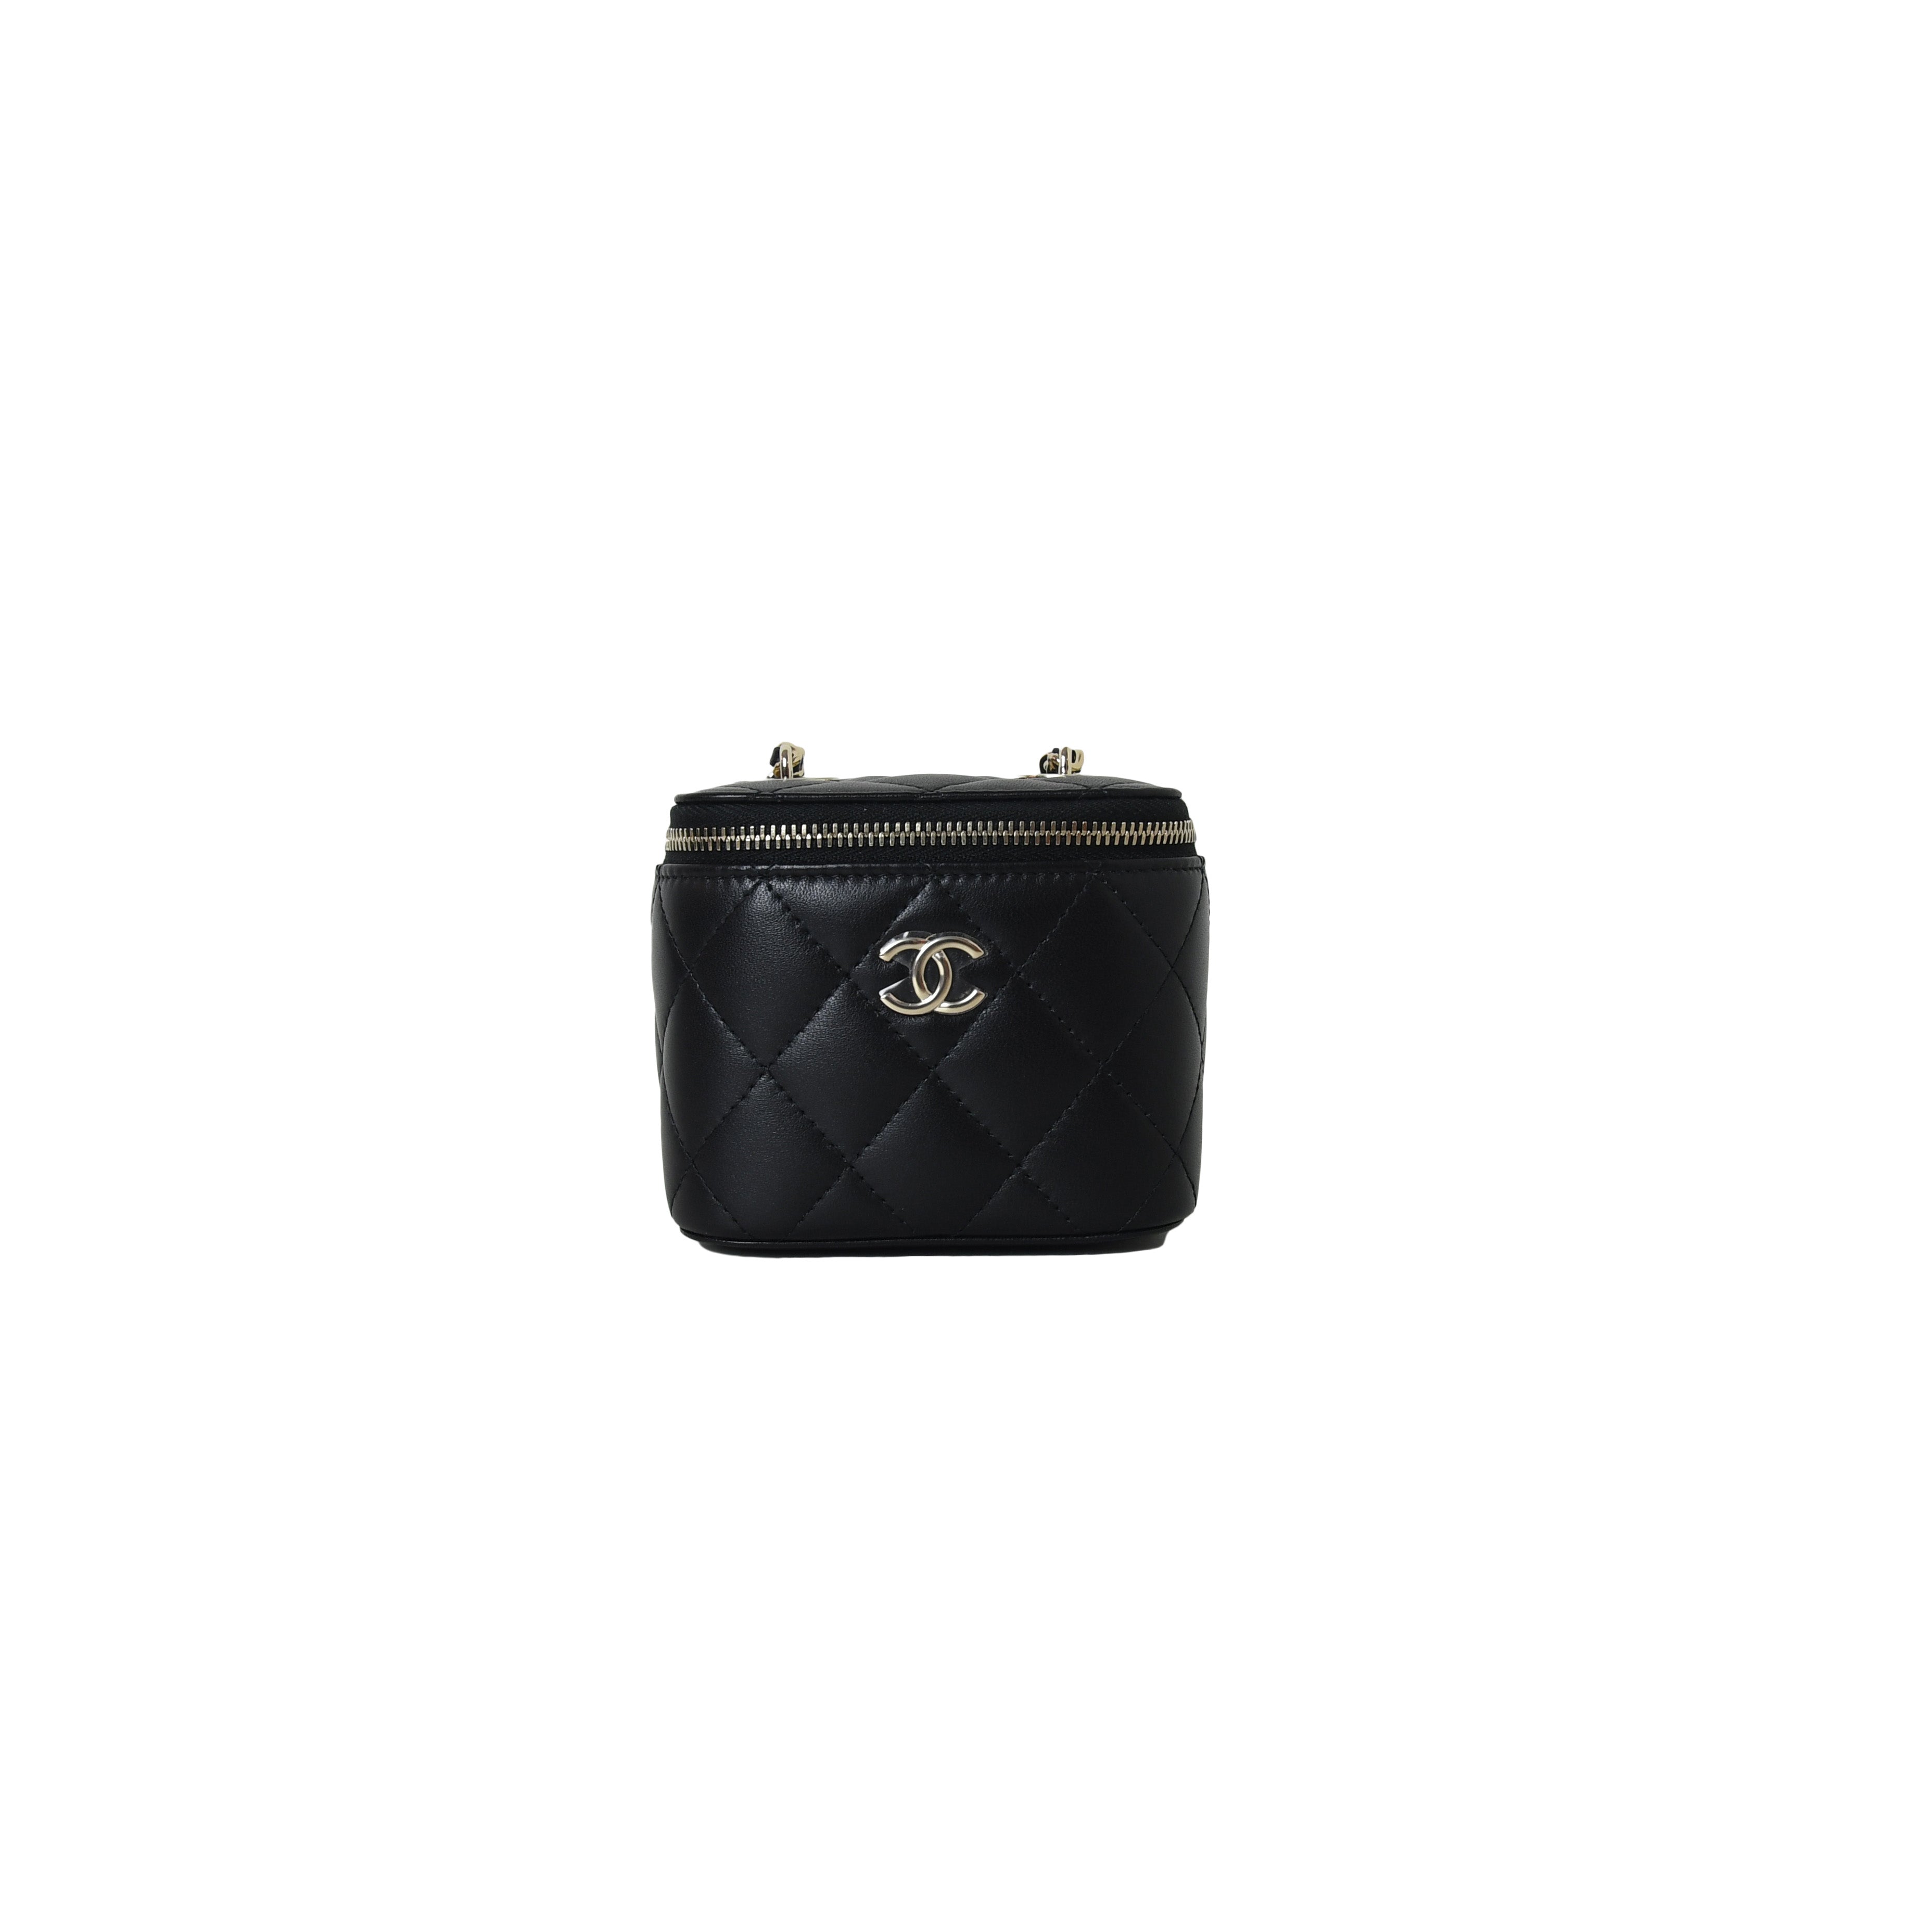 Chanel Pearl Crush Hobo Crossbody, Black Lambskin with Gold Hardware, New  in Box GA001